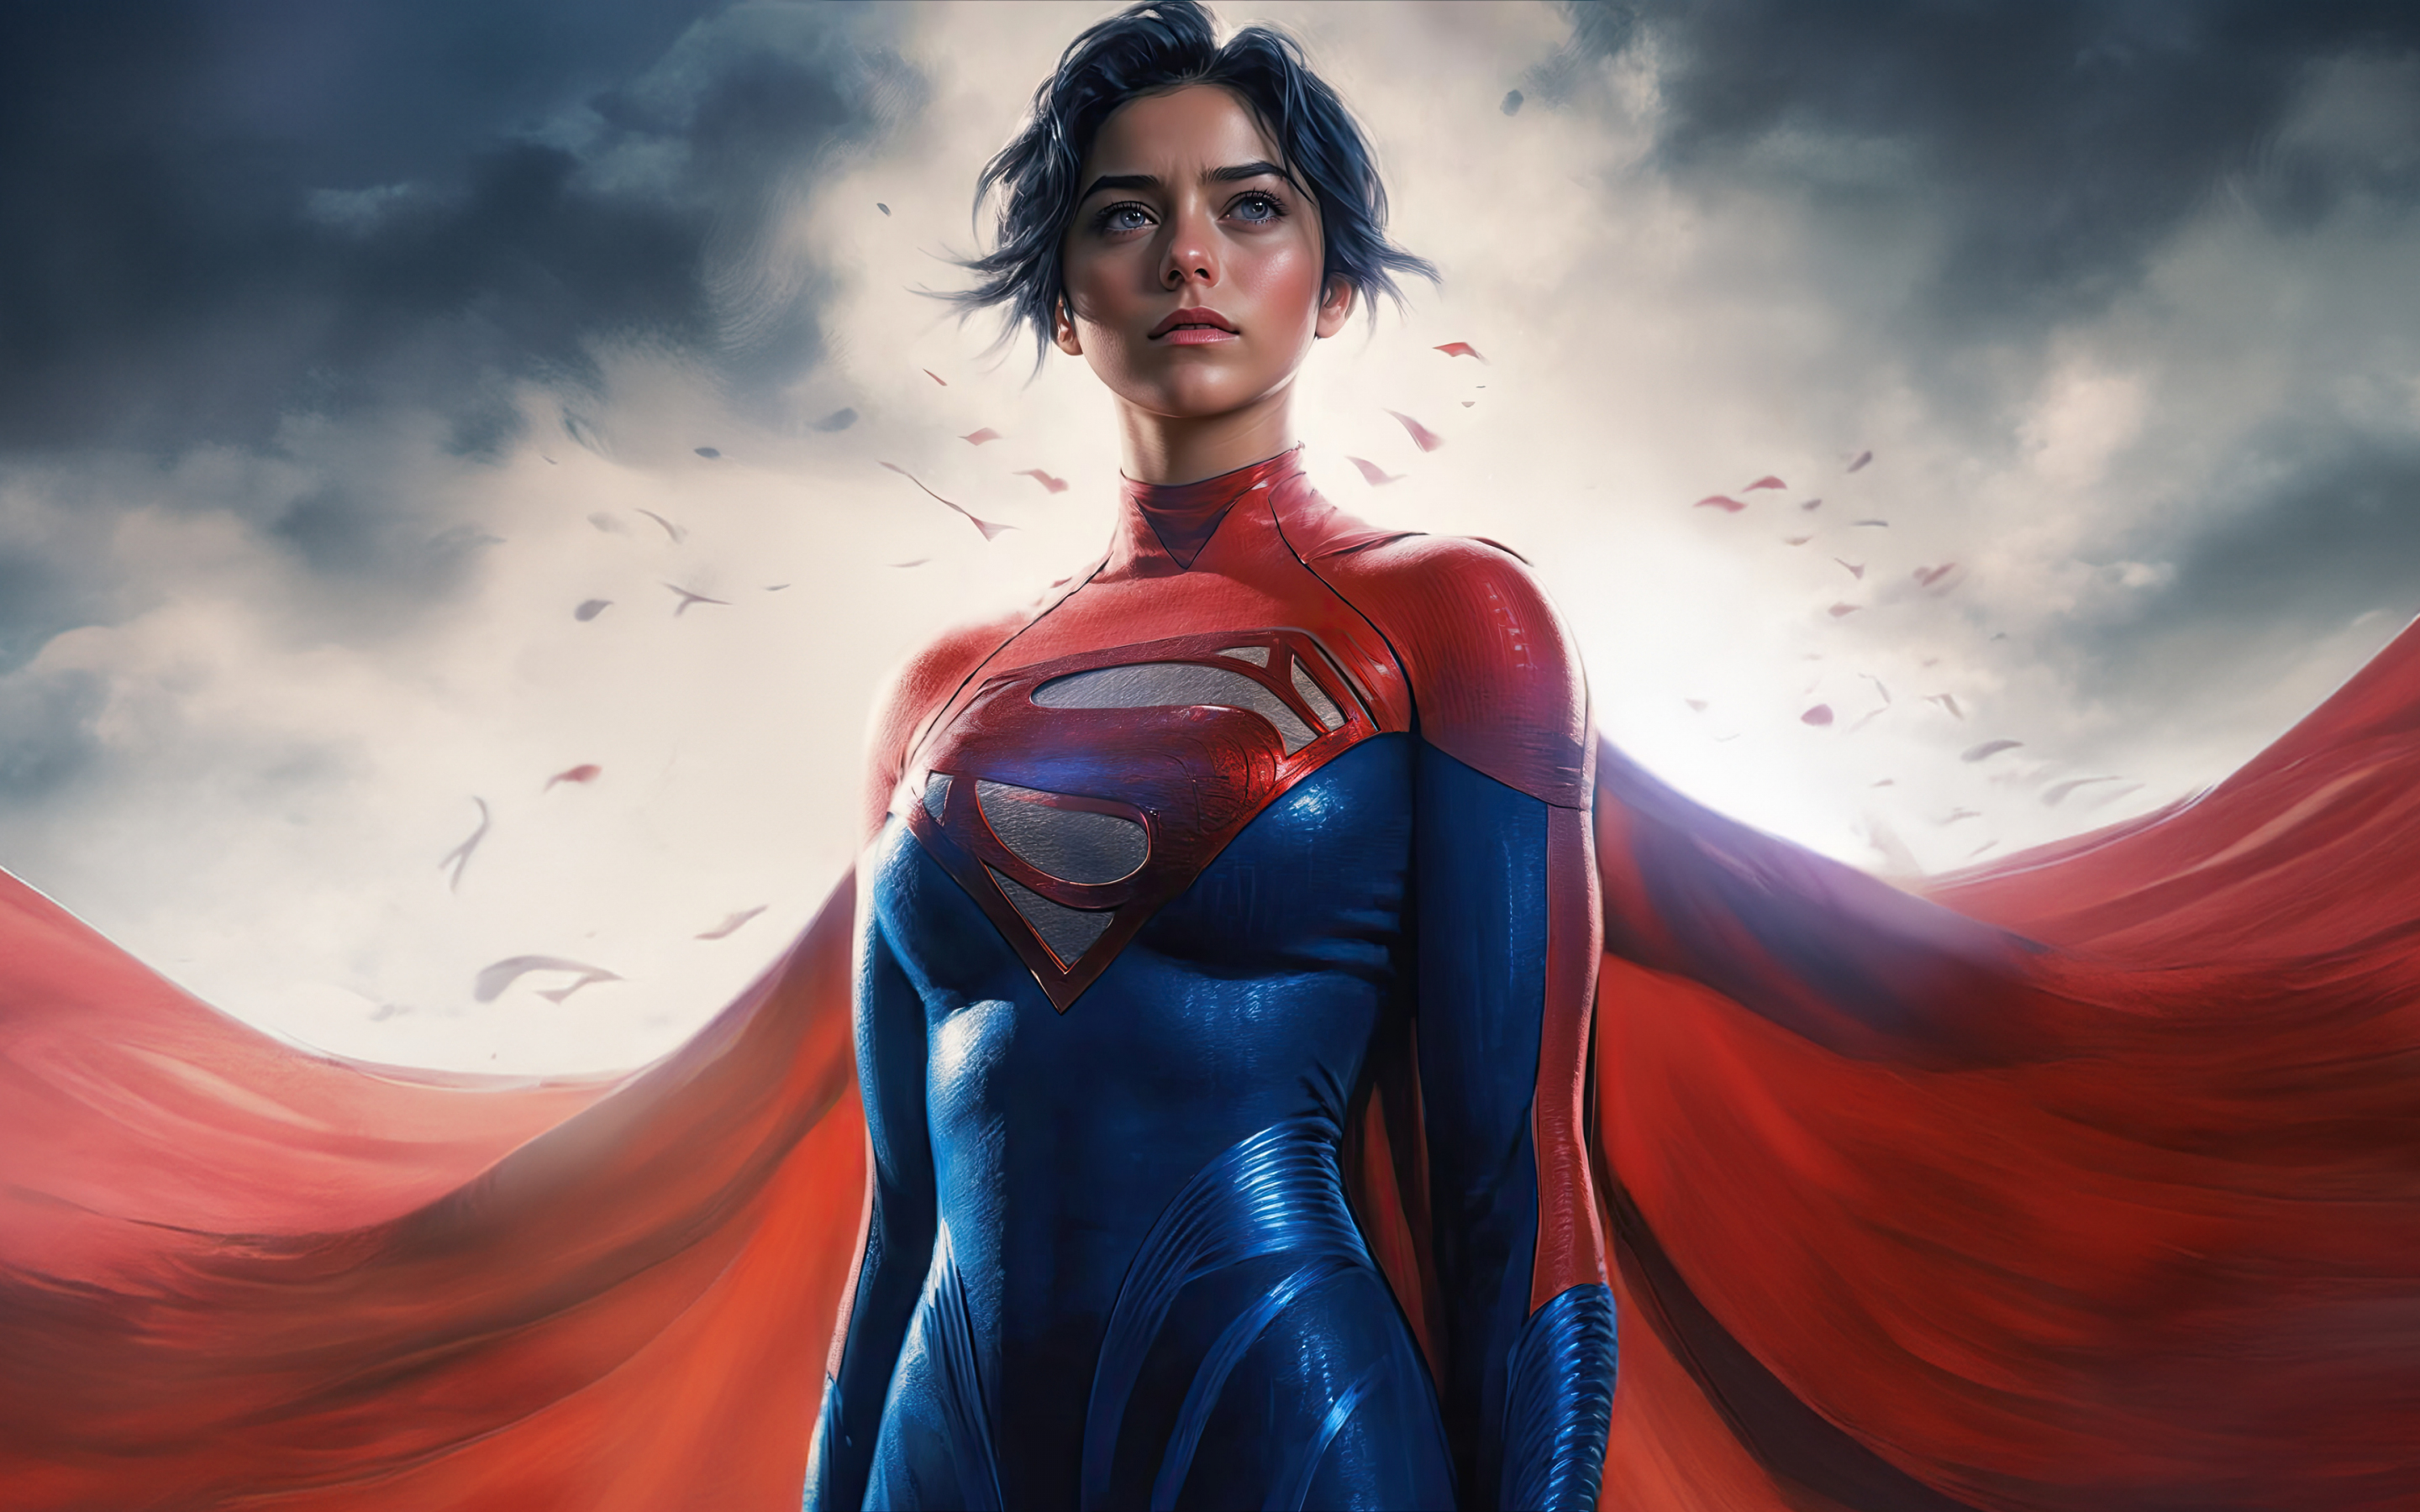 Powerful supergirl, superman's cousin, art, 2880x1800 wallpaper